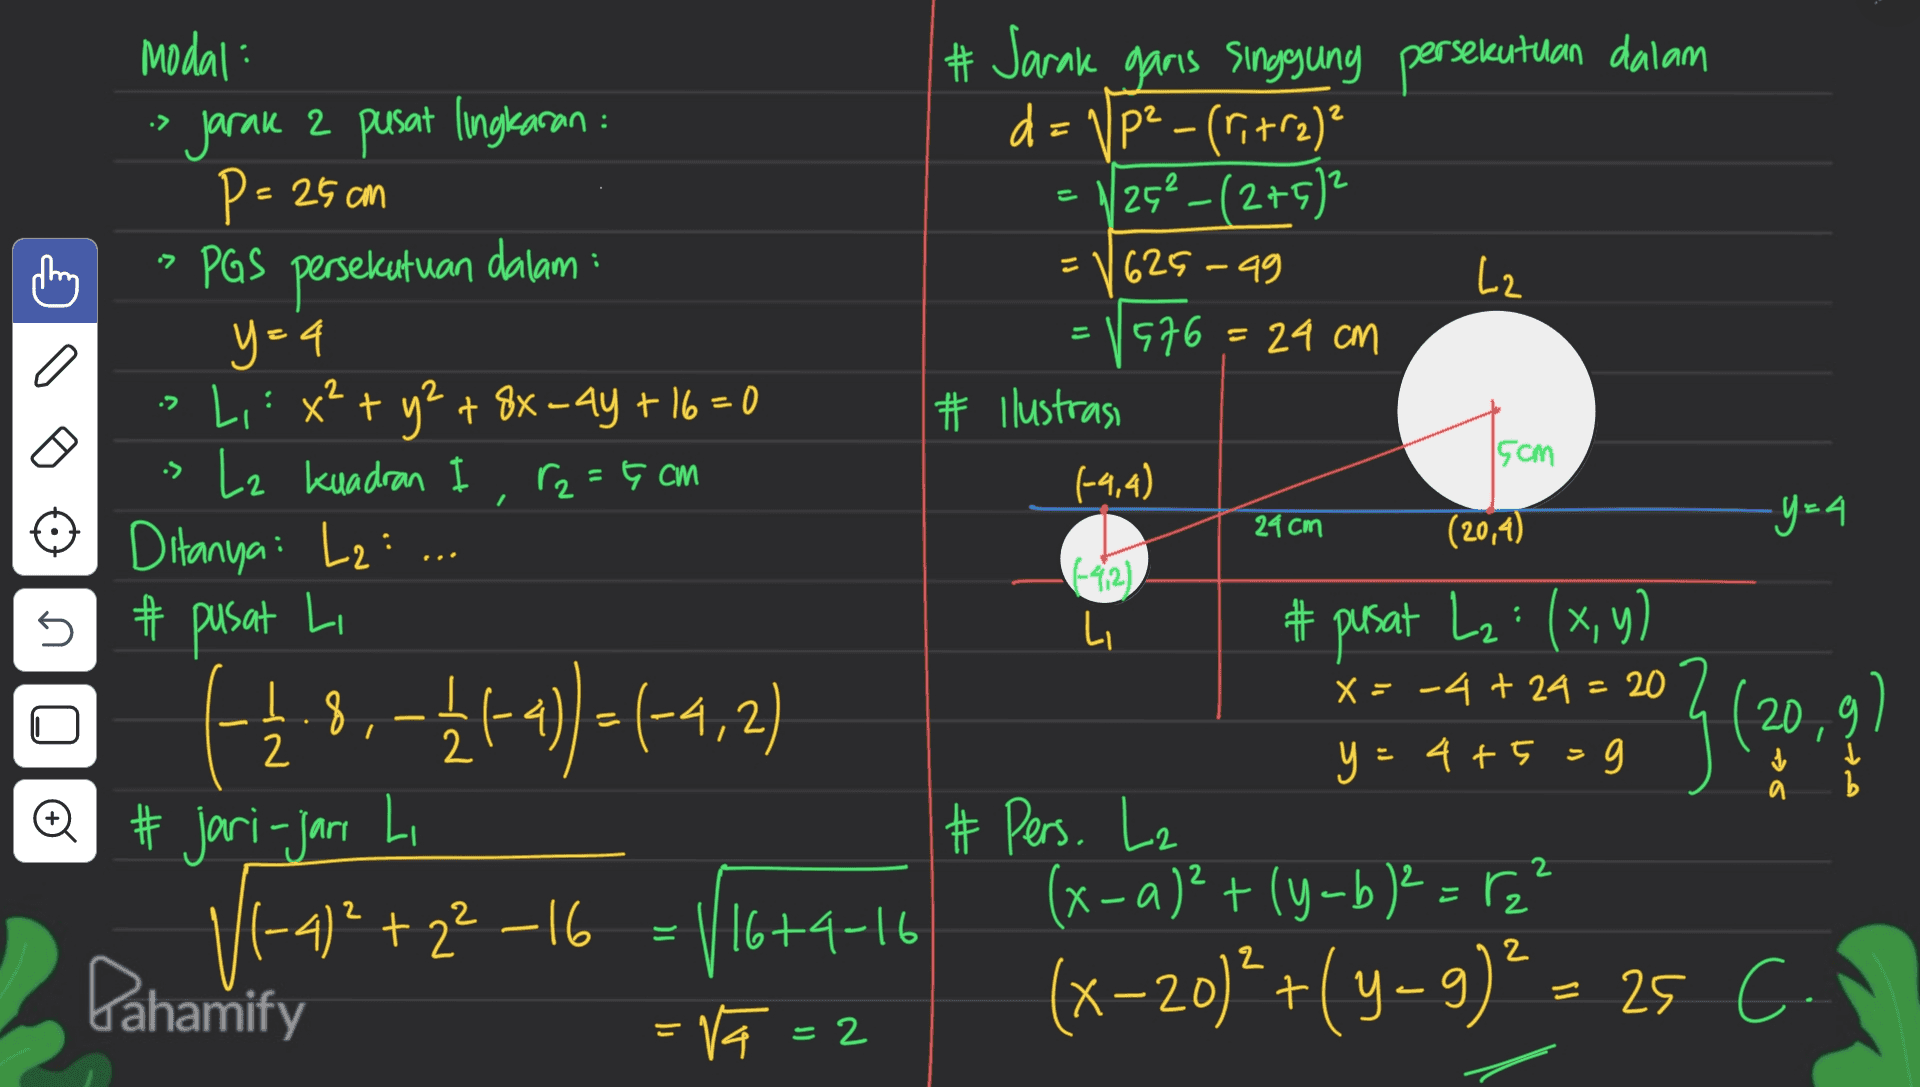 • - a 2 15cm • modal: jarak 2 pusat lingkaran : P = 25 cm PAS persekutuan dalam : y=4 Li : x² + y² + 8x_4y +16=0 » Lz kuadran r2 = 5 cm Ditanya: L2: # pusat Li +18,-4+4) =(-4,2) #jari-jari Li -4)2 +22 –16 - 116+4-16 = = Va=2 # Jarak garis singgung persekutuan dalam d=VP² -(ri+rz)? 26- (275) 625-99 L2 = 1976= 24 cm # Ilustrasi (-4,4) (20,4) -y=4 (-42) Li # pusat L₂: (x,y) X = -4 + 24 = 20 ( 20 y=4+5=g # Pers. Lz (x-a)²+(y-b) ² = ,² (x-20)? +( y −9)= 25 cm 24cm s Q = Pahamify 2 